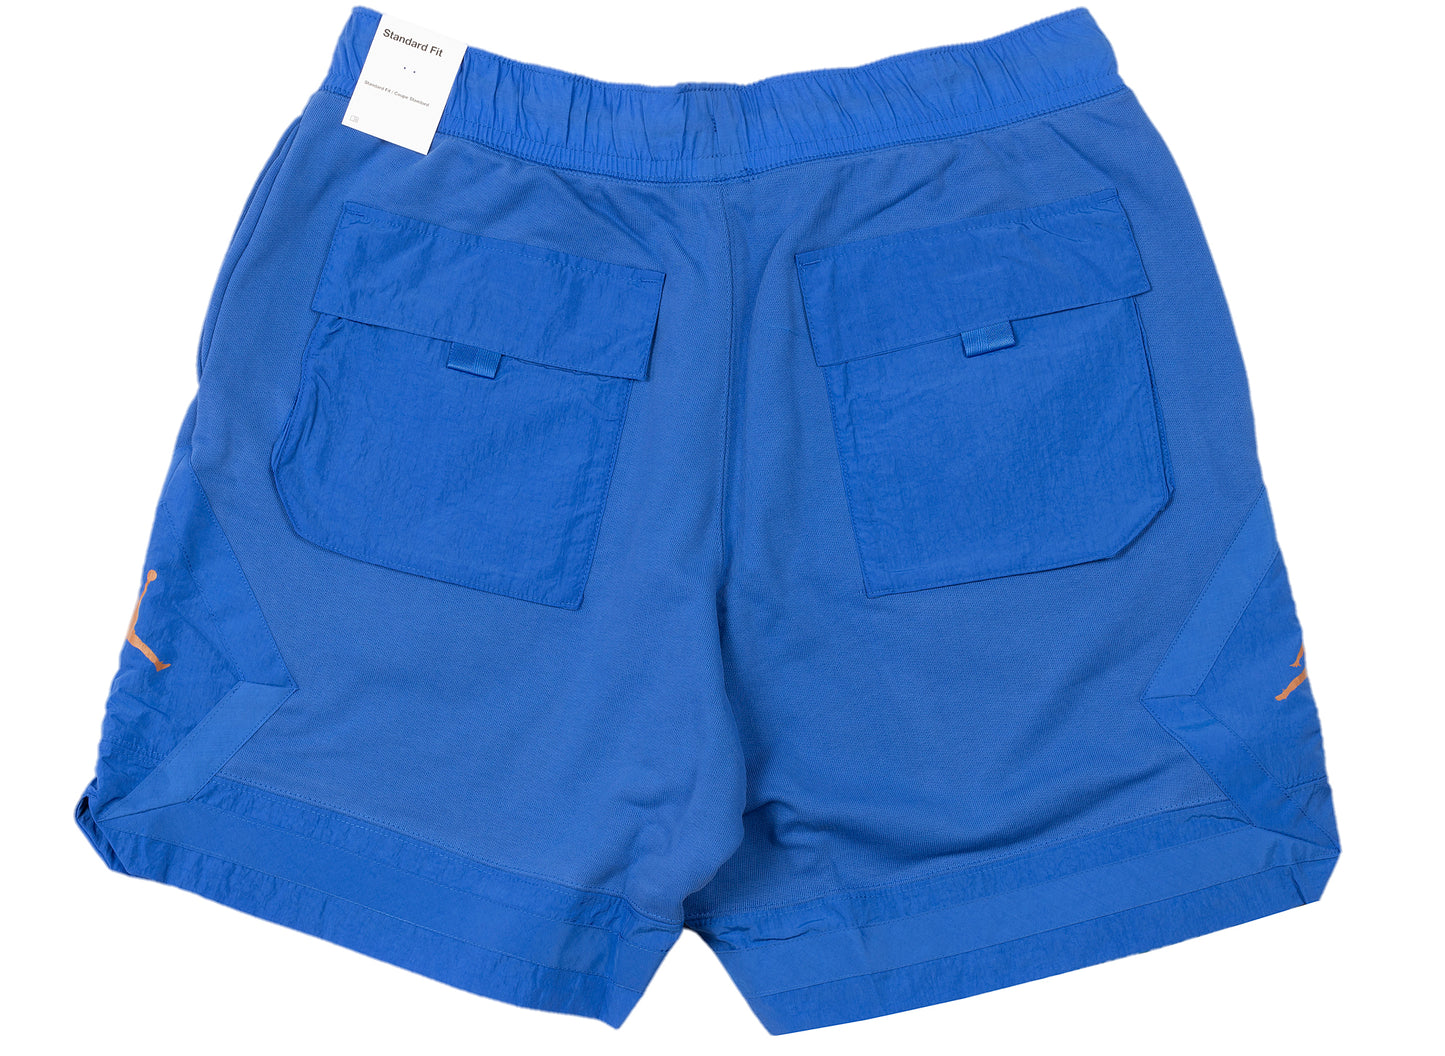 Jordan 23 Engineered Fleece Shorts in Blue